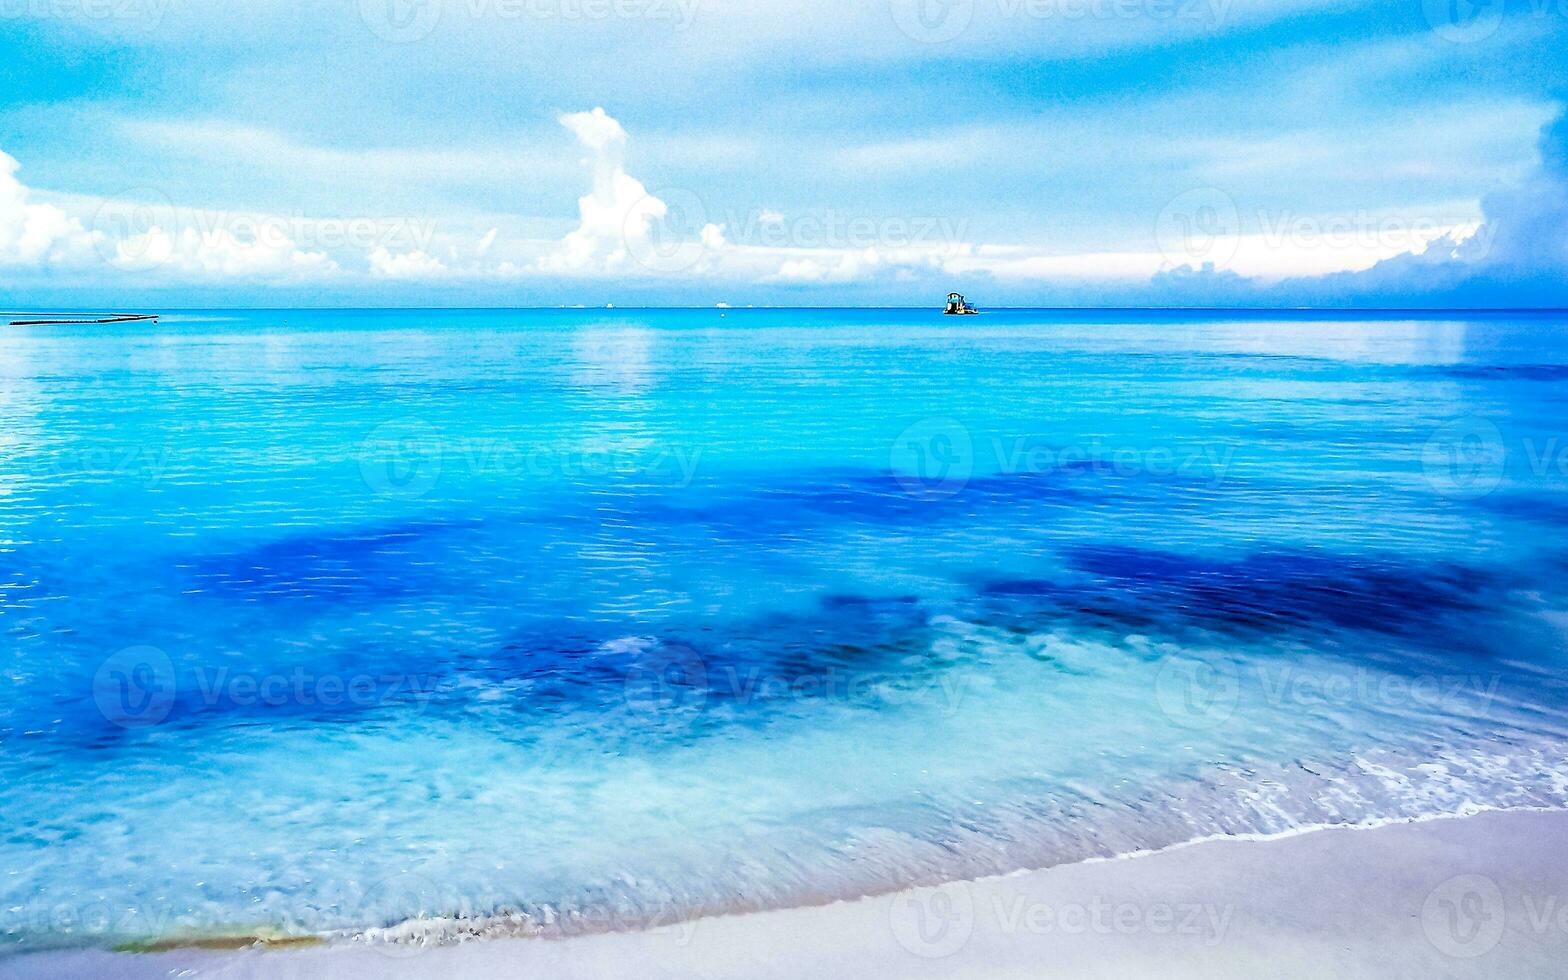 praia tropical do caribe água turquesa clara playa del carmen méxico. foto